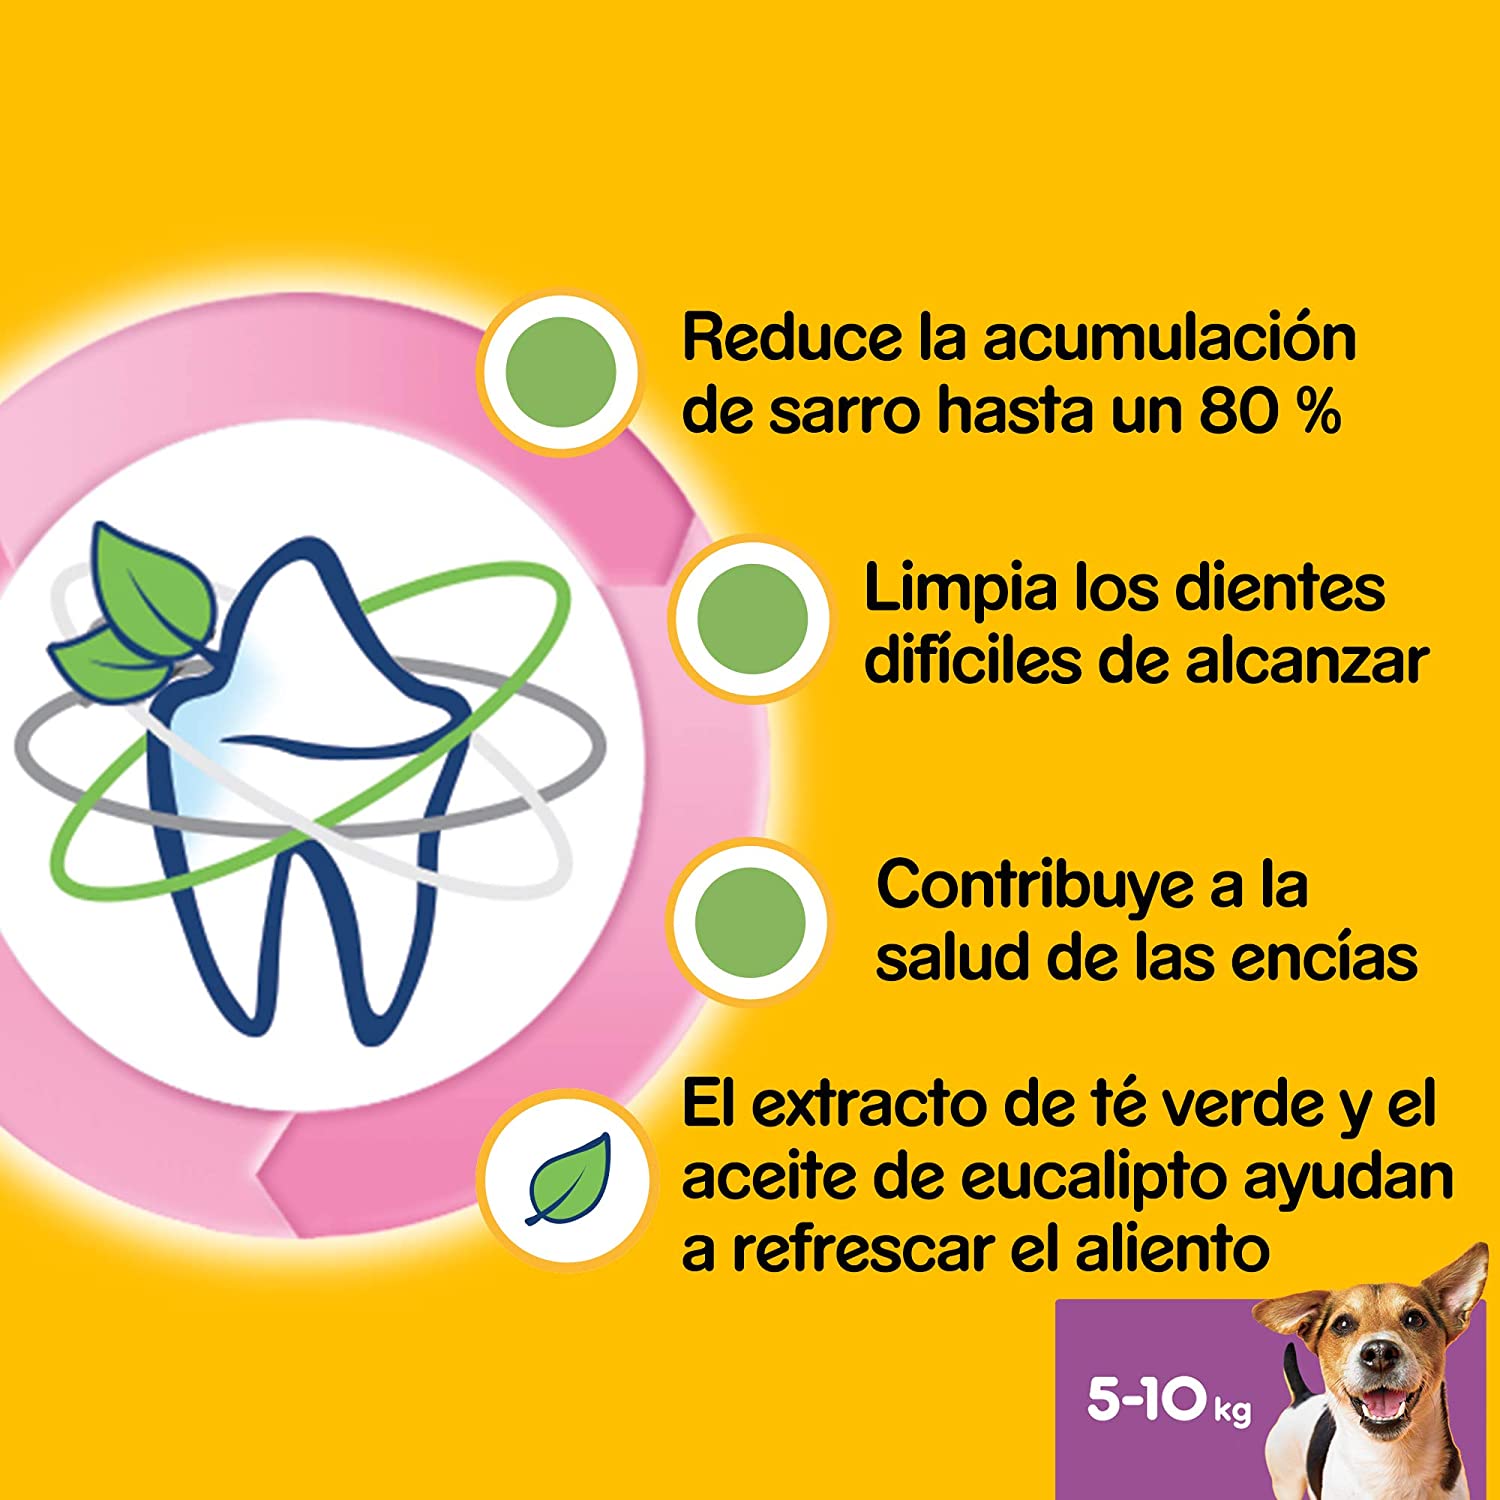  Pedigree Dentastix Fresh Snacks para Higiene Oral (Perro Pequeño 5-10 Kg) - 28 piezas, 440 g. 